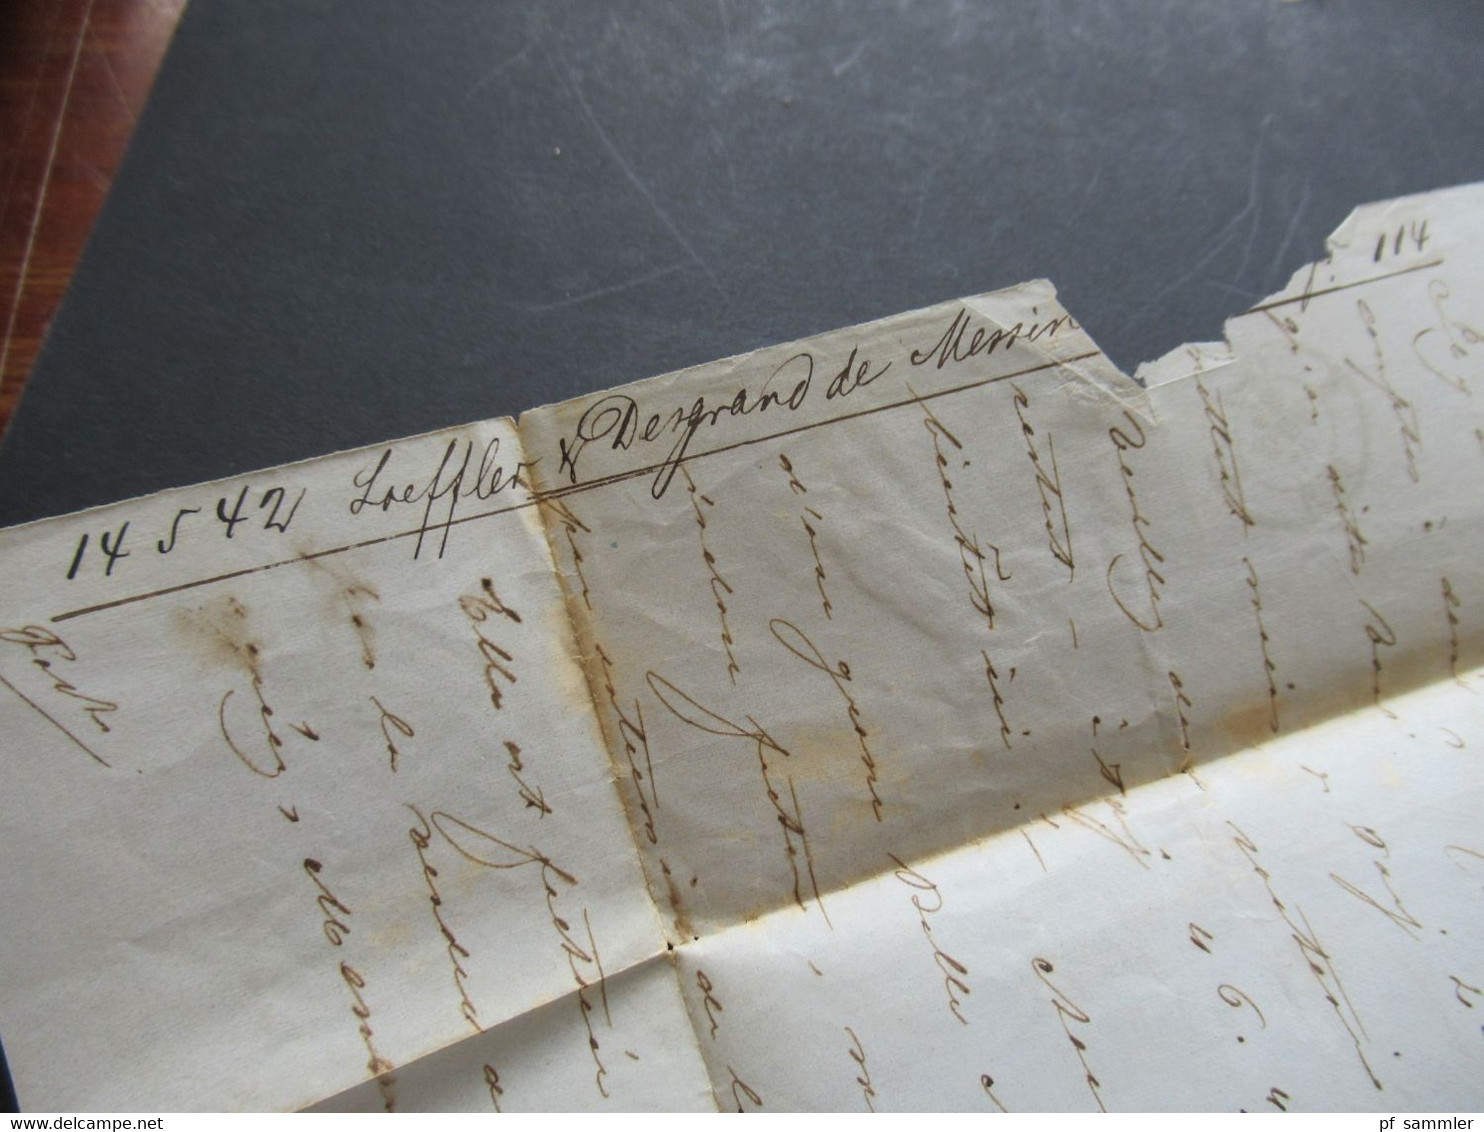 Italien Sizilien 1858 Faltbrief mit Inhalt / Auslandsbrief Messina - Lyon handschriftlicher Vermerk par Vapeur francais